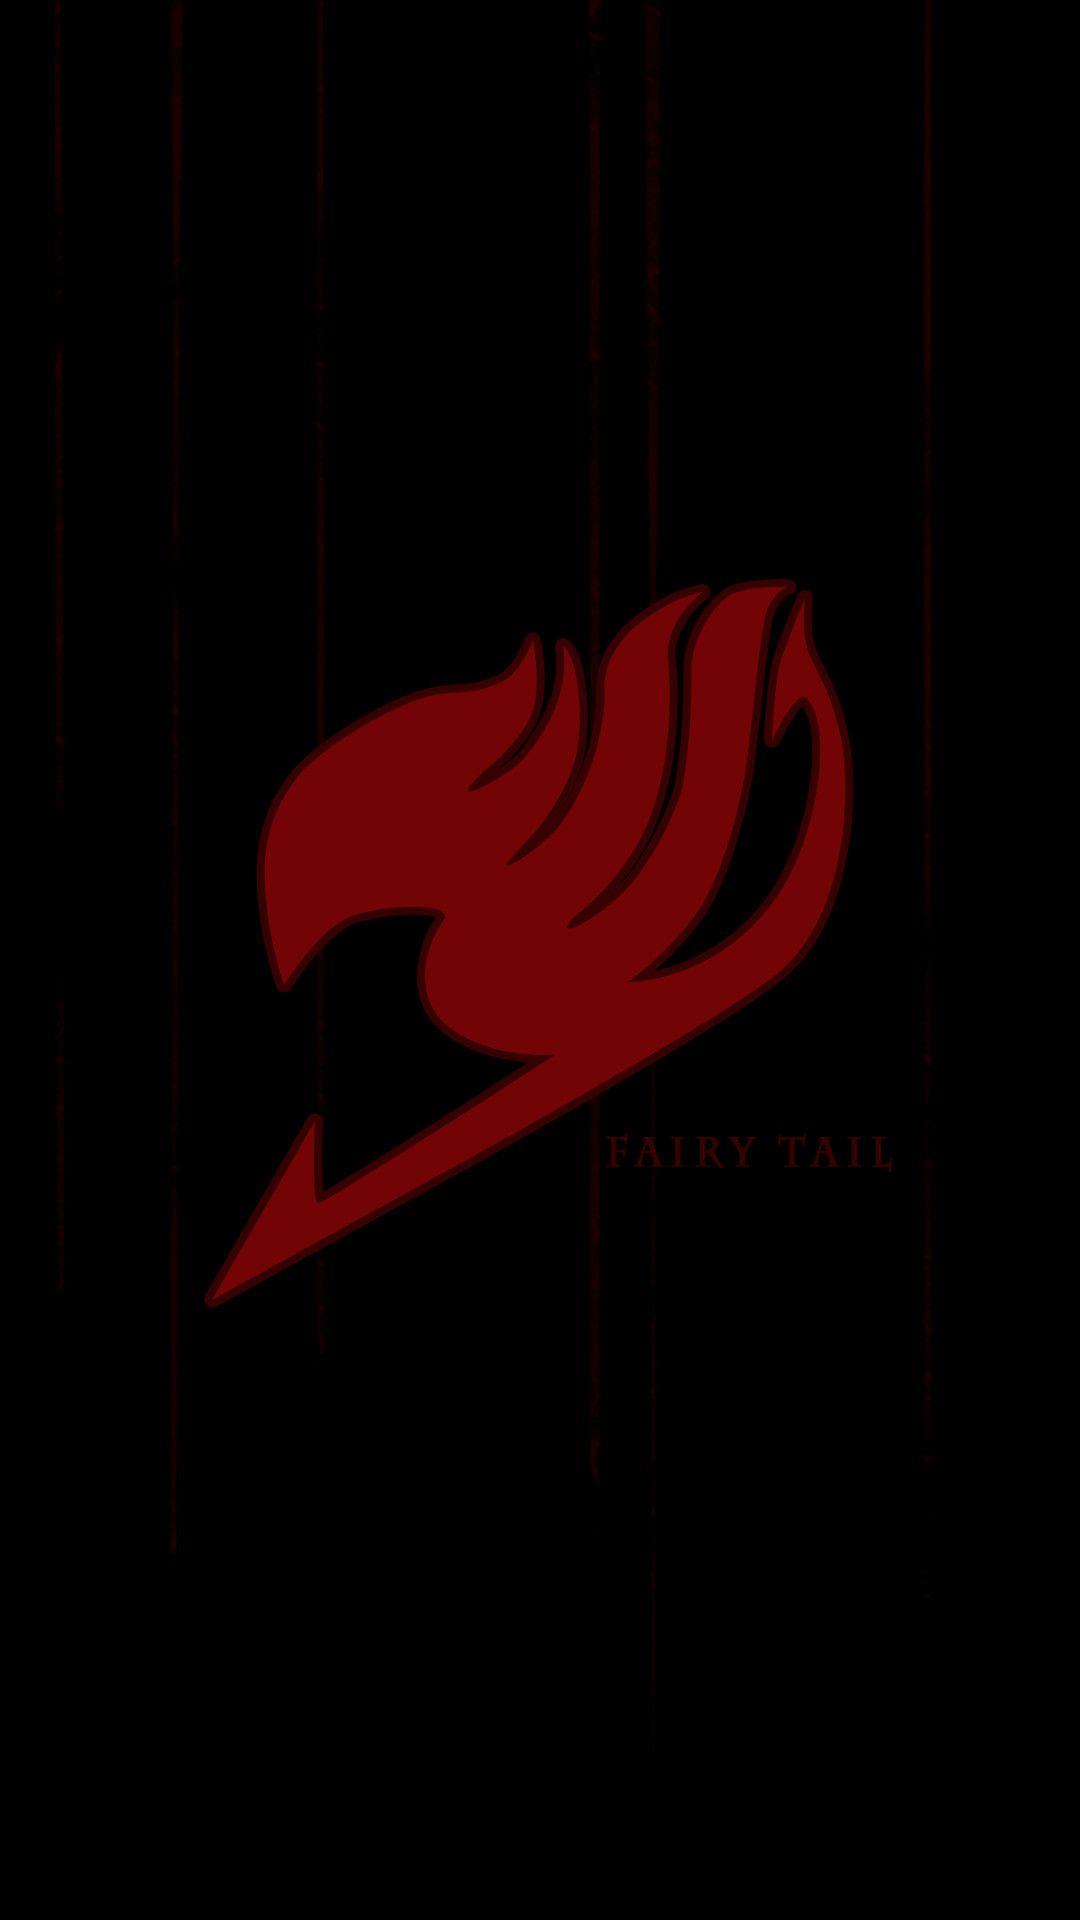 Fairy Tail Logo Wallpaper Kolpaper Awesome Free Hd Wallpapers